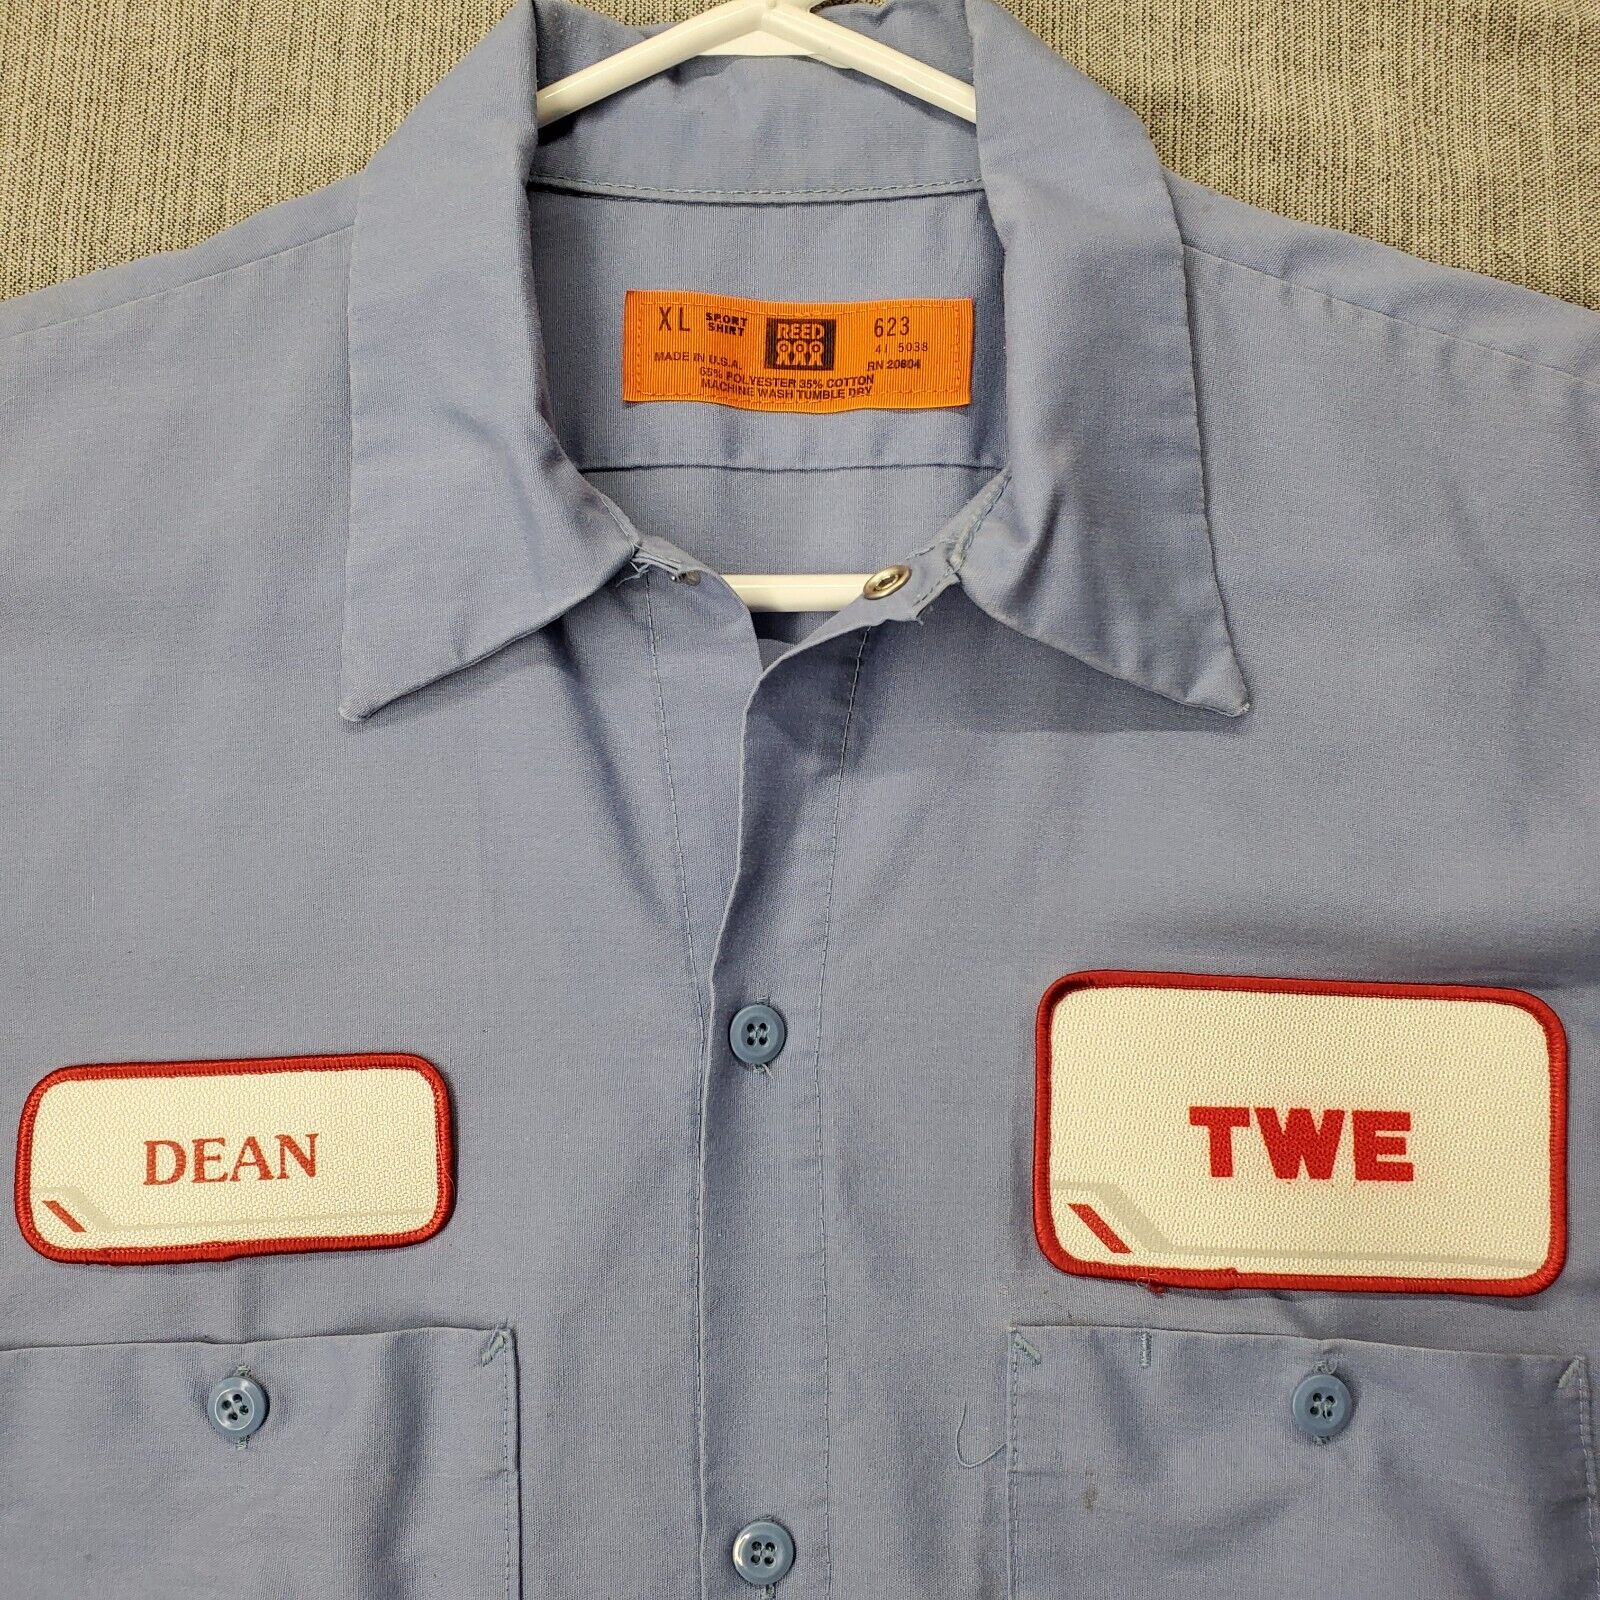 Vtg Trans World Express TWE TWA Airlines White Red Uniform Patch & Work Shirt XL